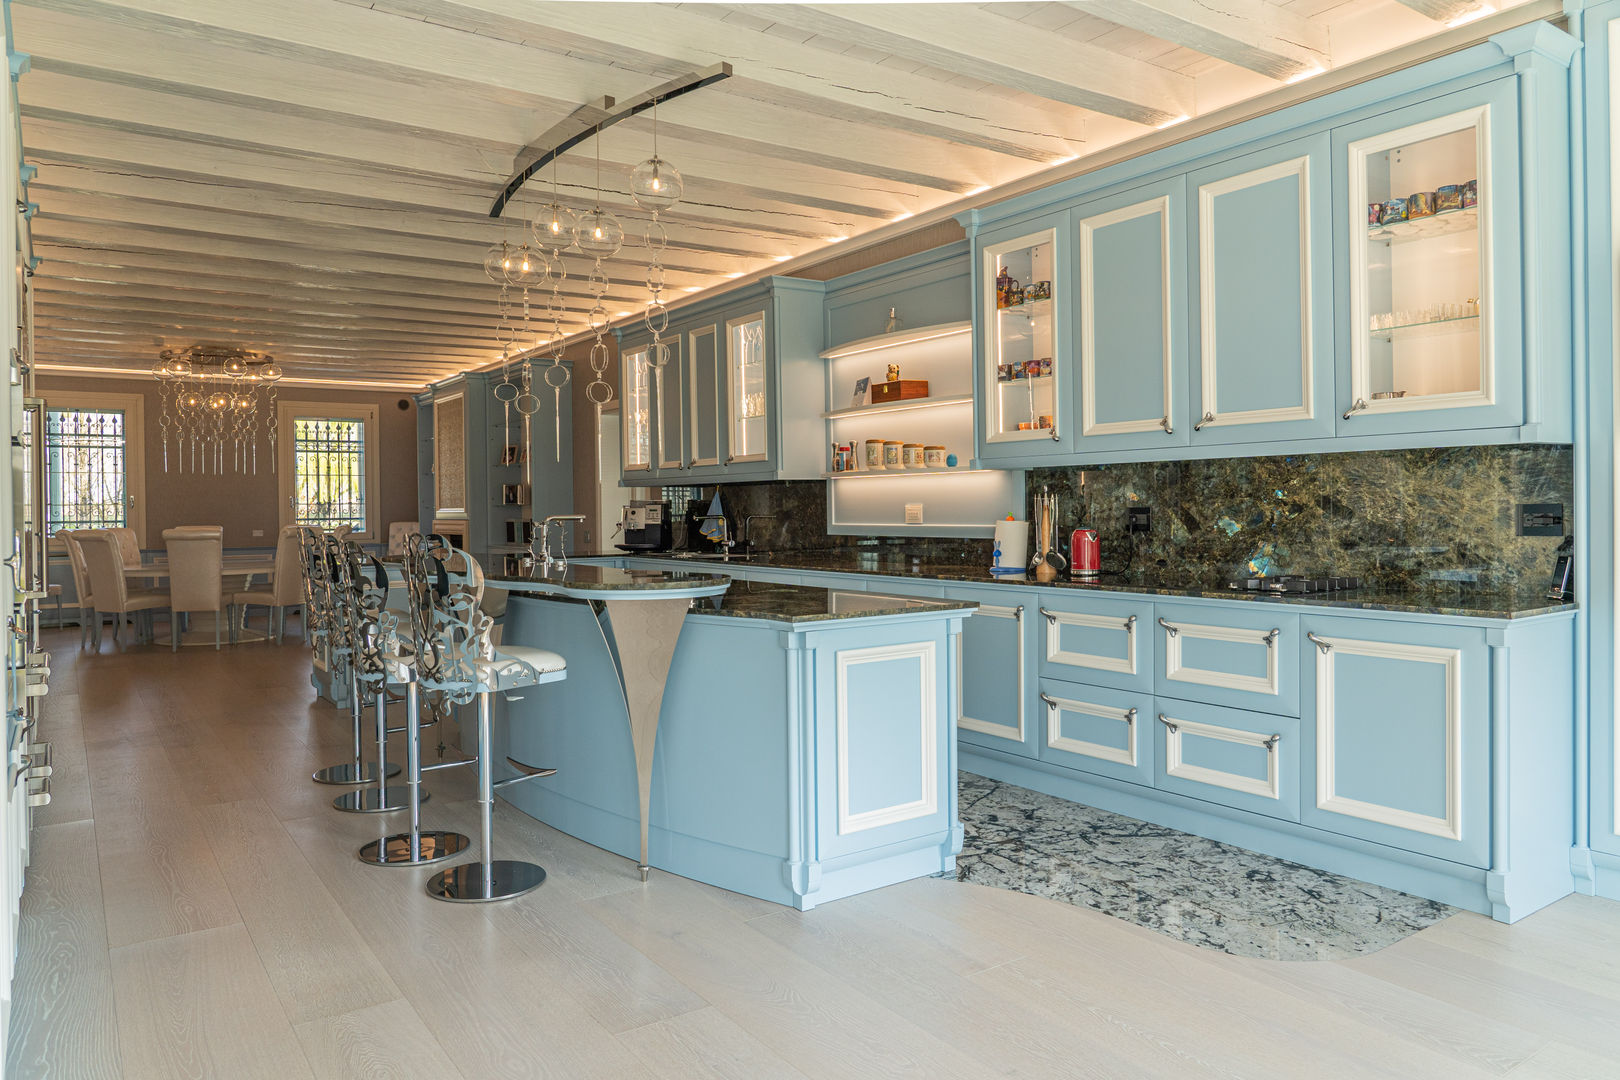 Villa rustica - Brummel, Brummel Brummel Built-in kitchens Solid Wood Multicolored